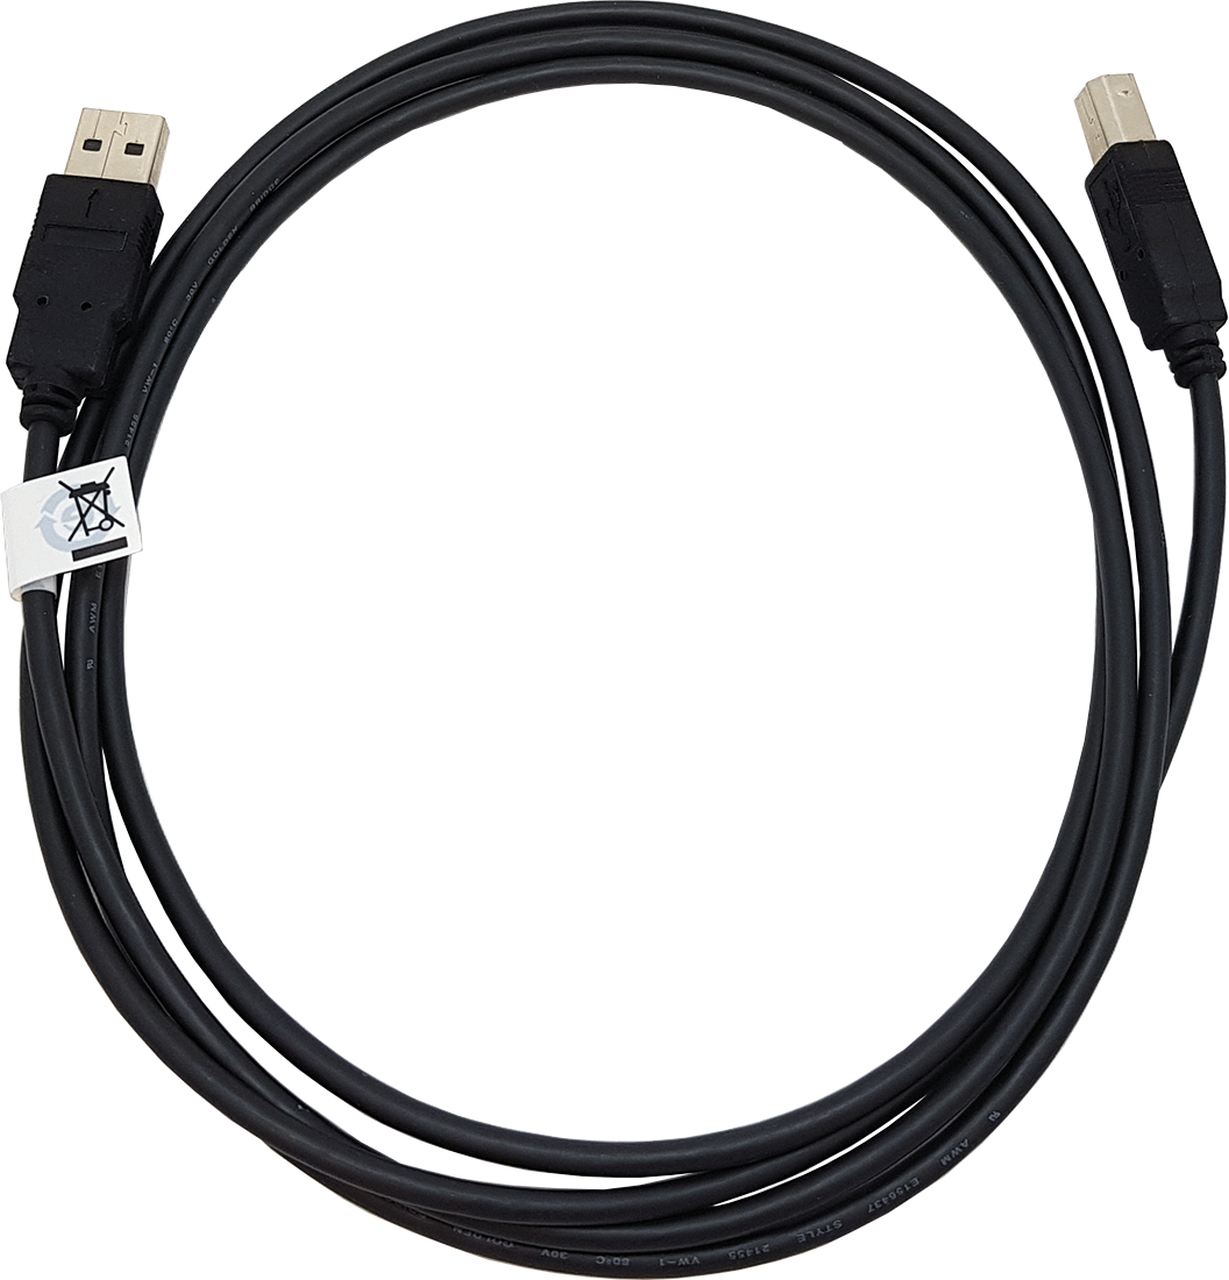 Motorola Programming Cable USB A to USB B 30009477001